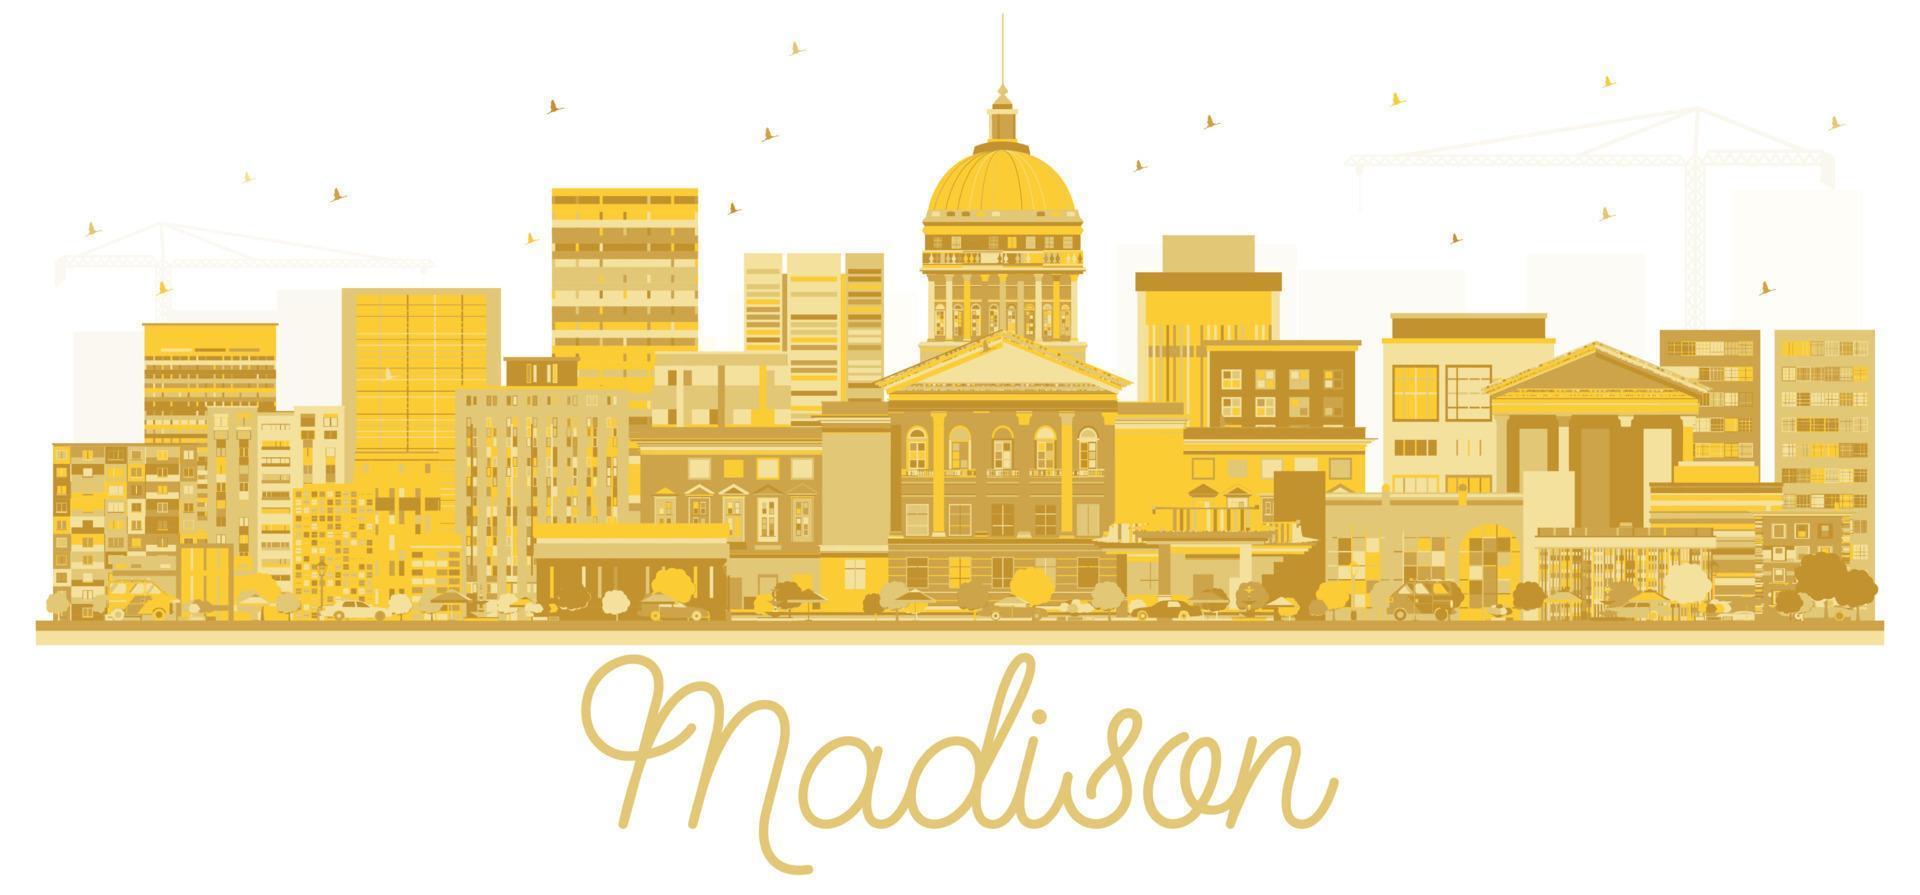 madison stad skyline gouden silhouet. vector